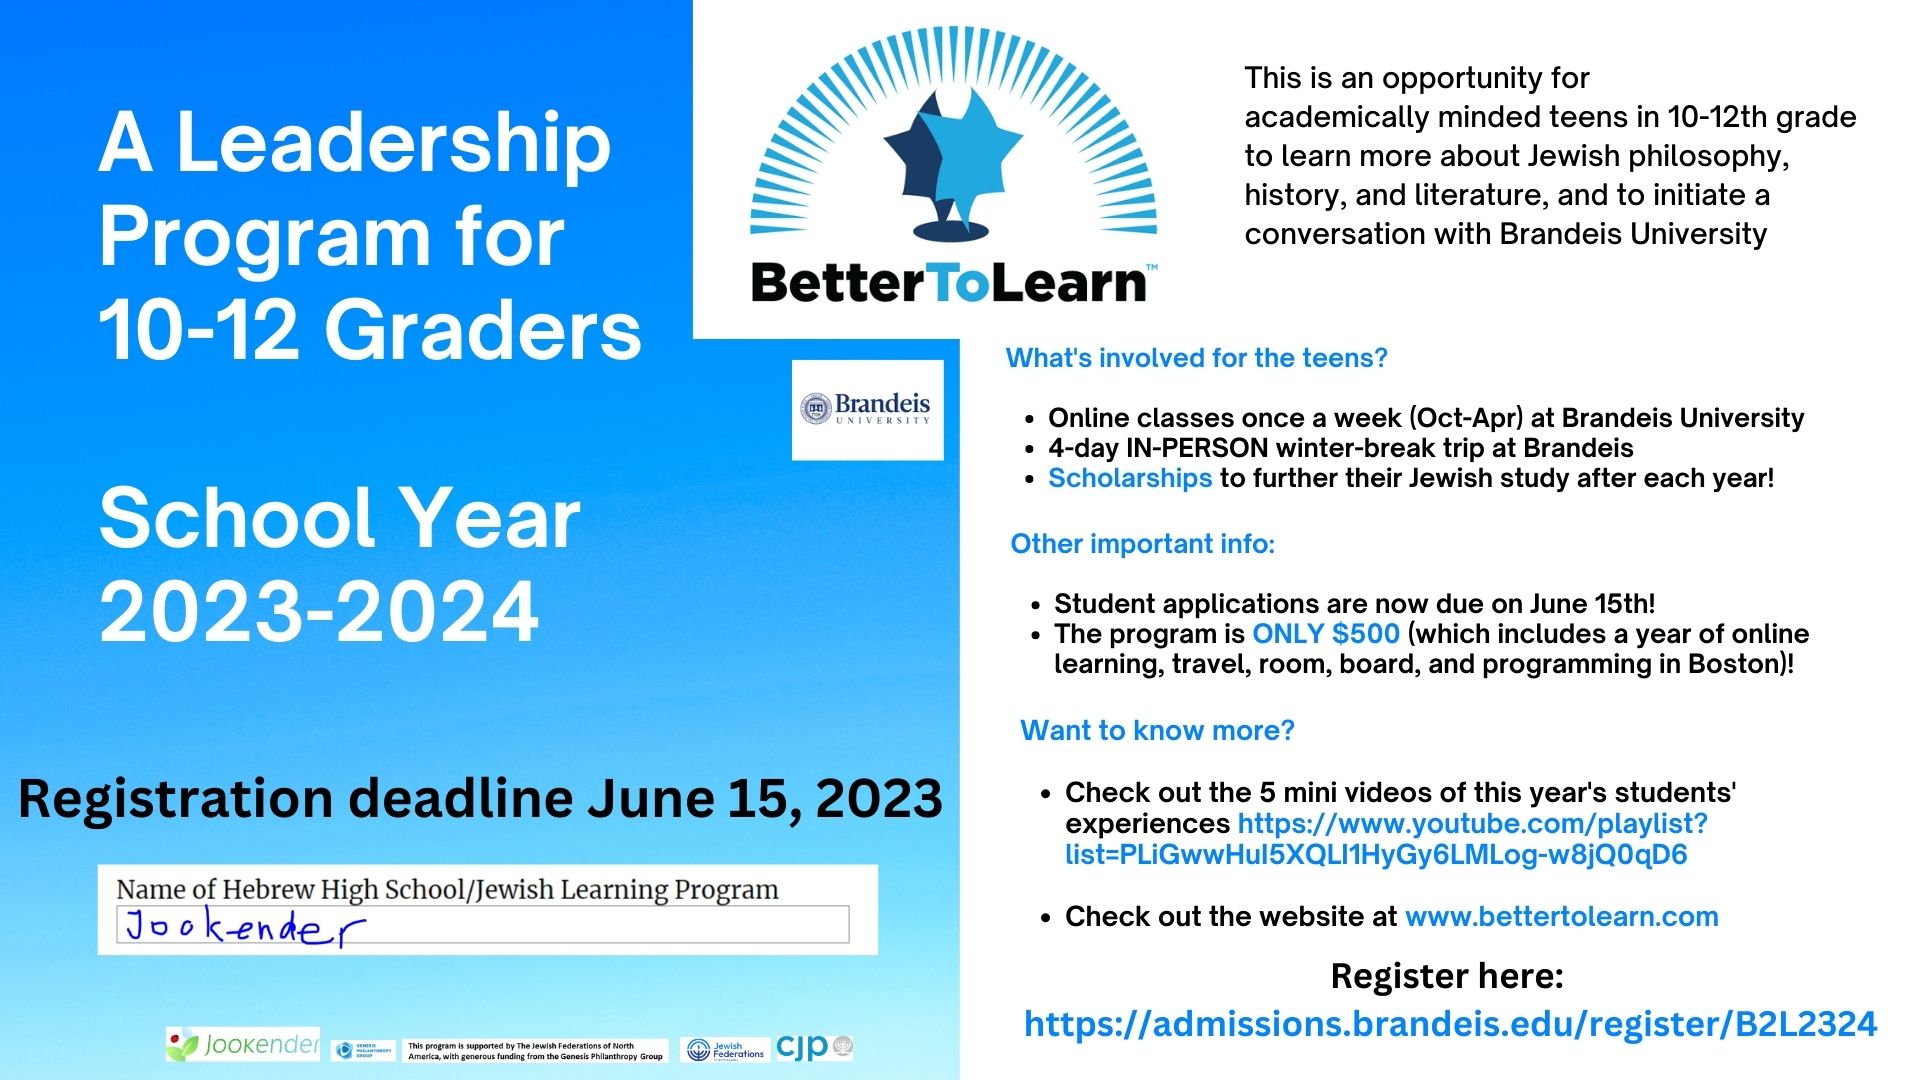 A Leadership Program for 10-12 Graders